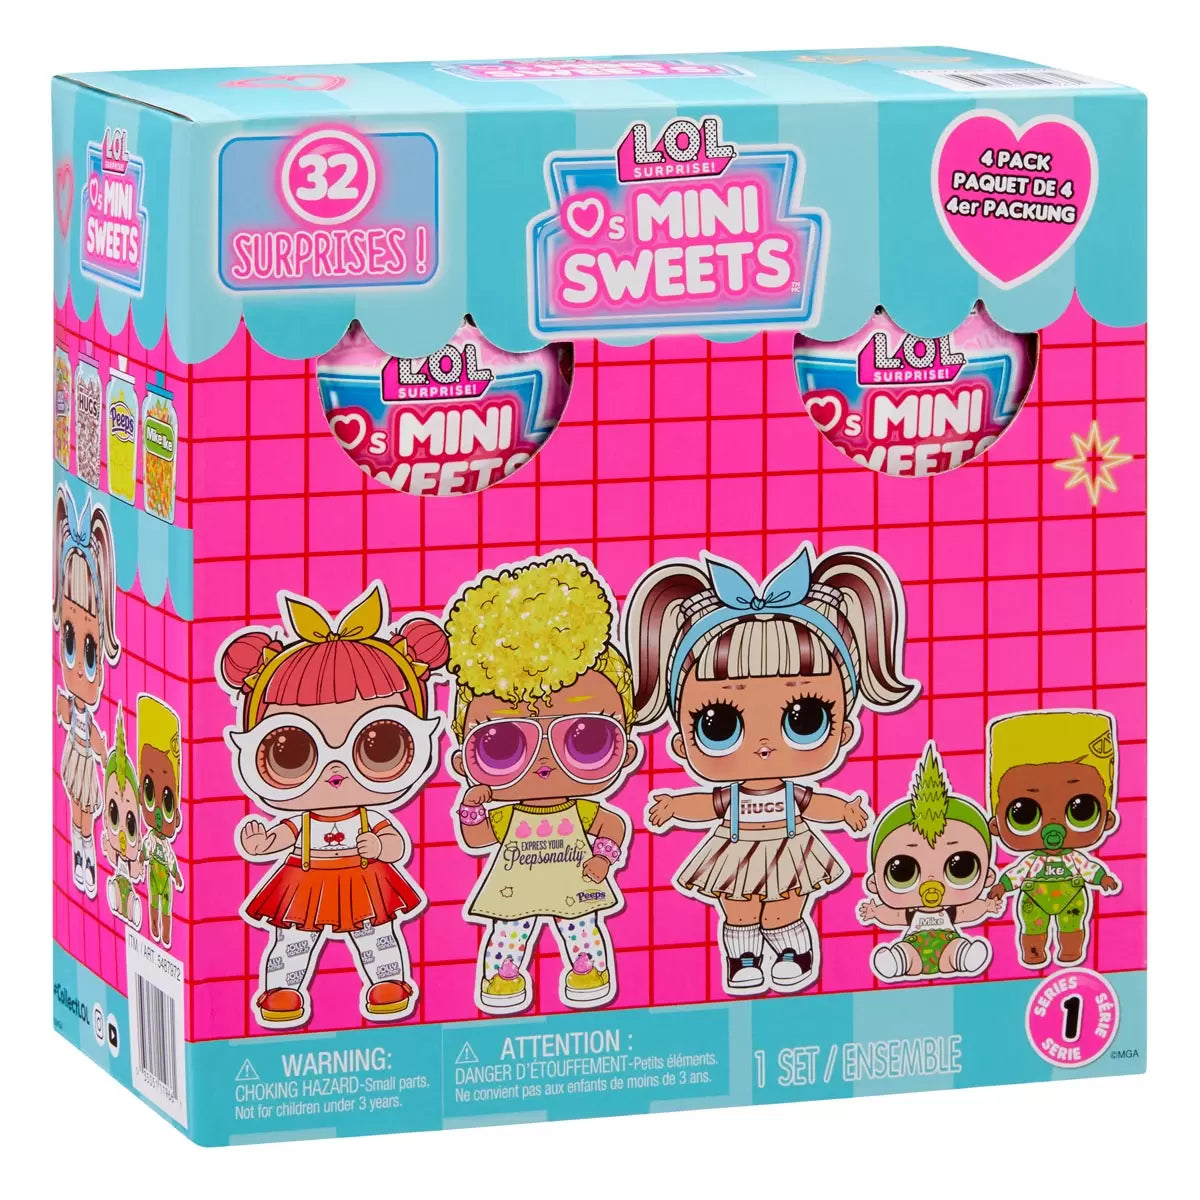 L.O.L Surprise! Loves Mini Sweets Peeps 4 Pack Assortment